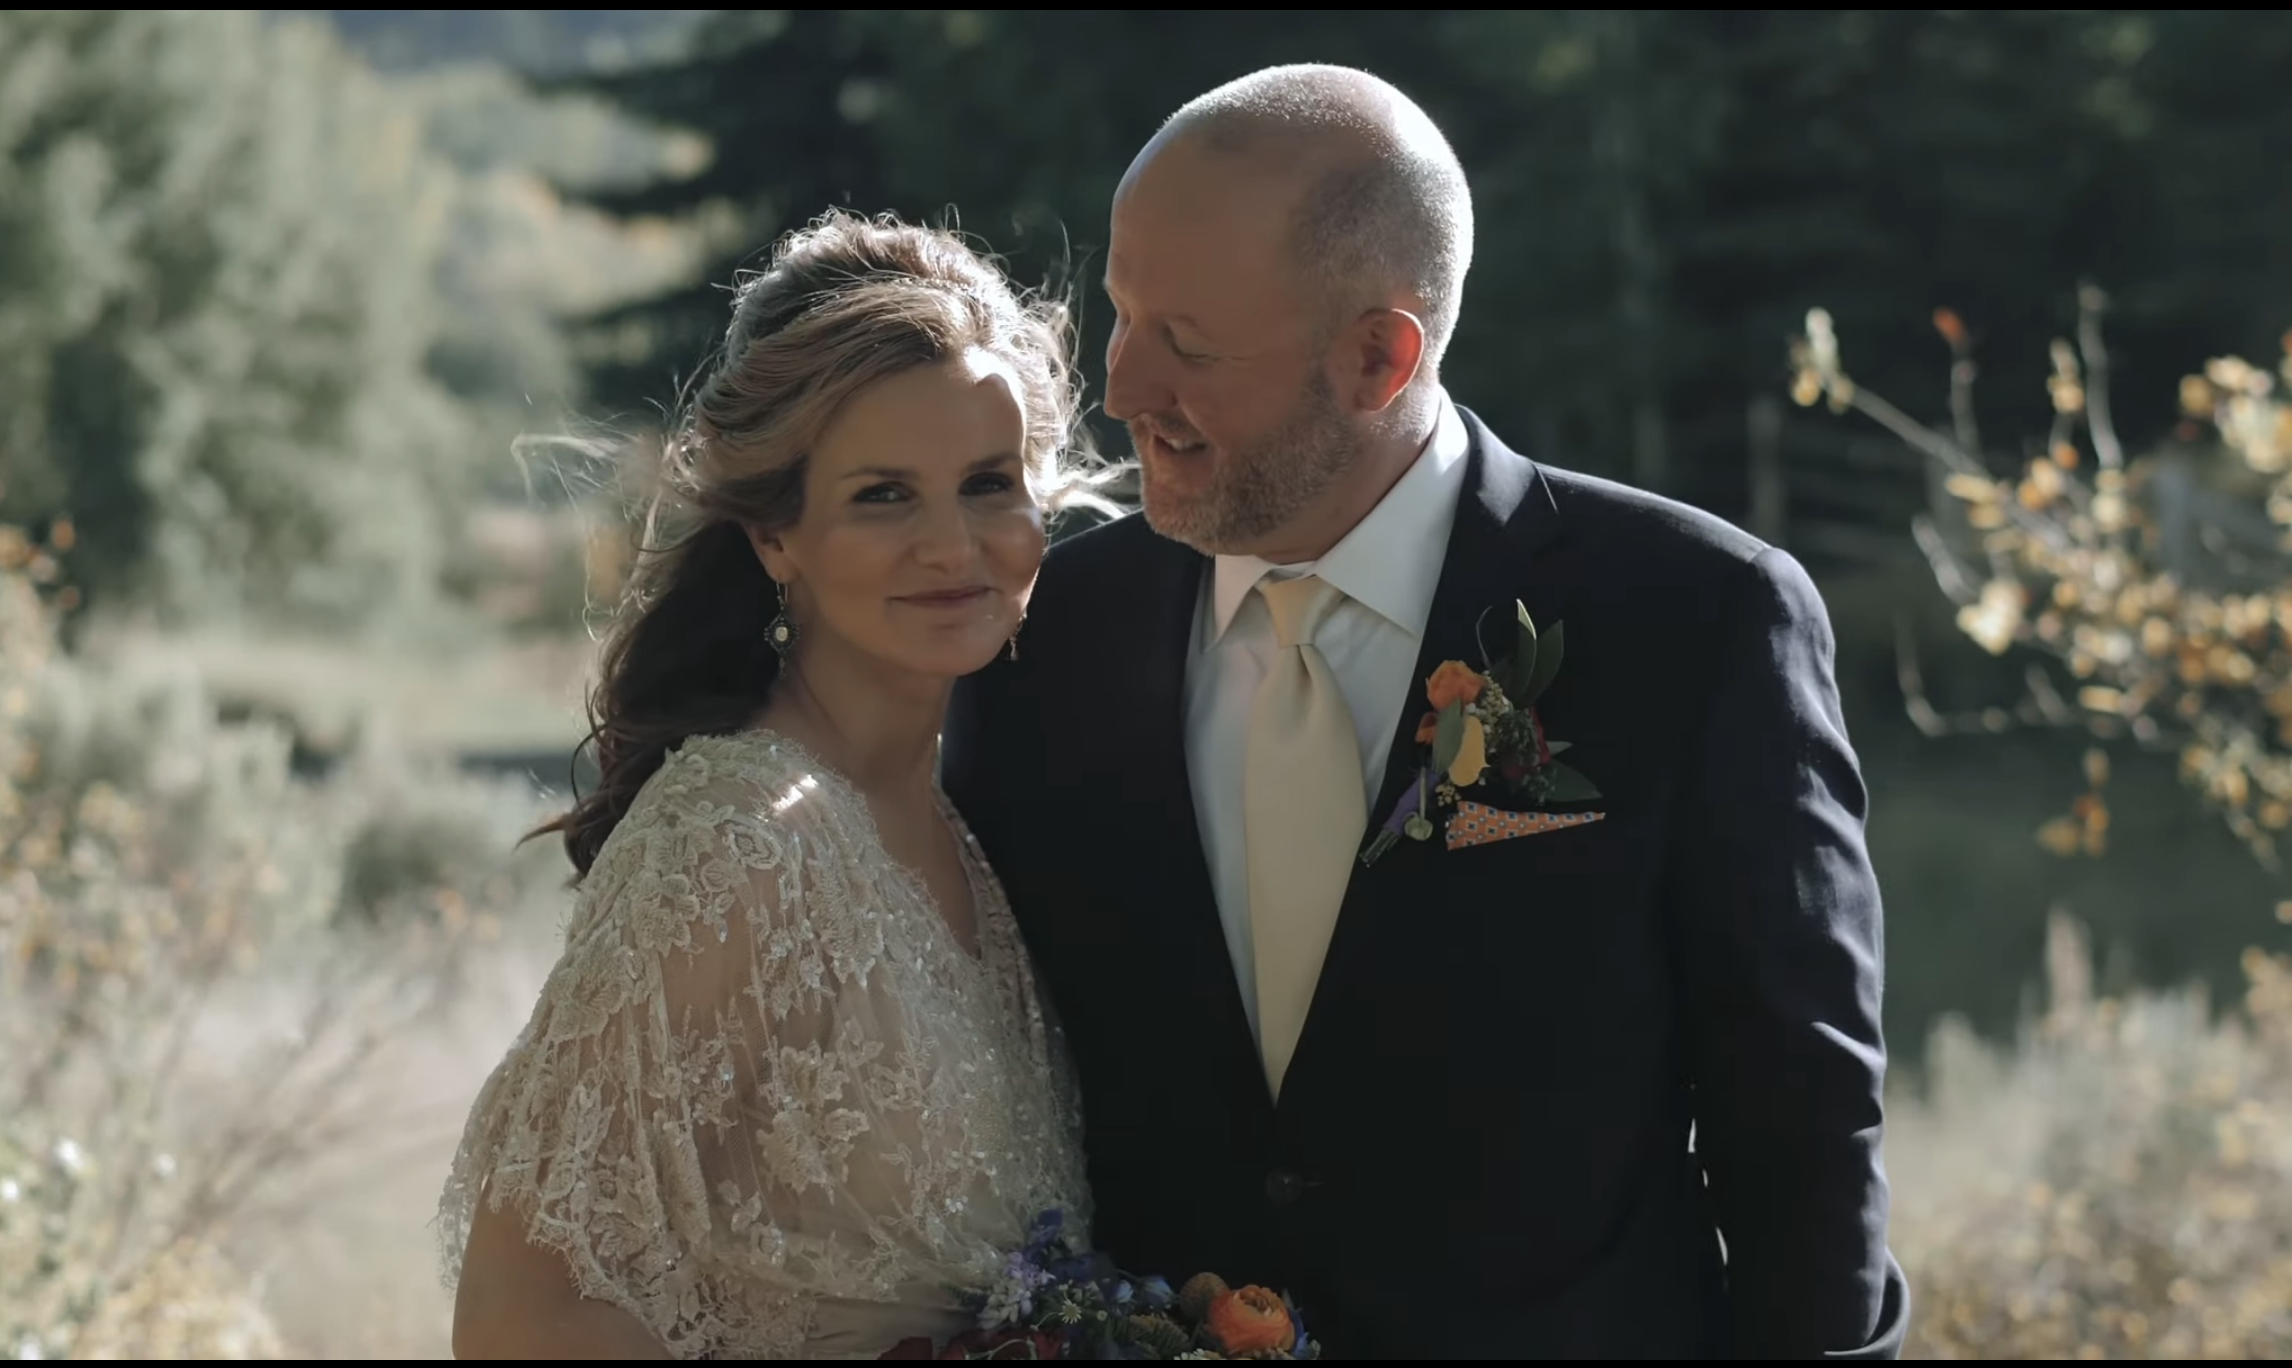 Toni + Charlie | An Aspen, CO Wedding Video